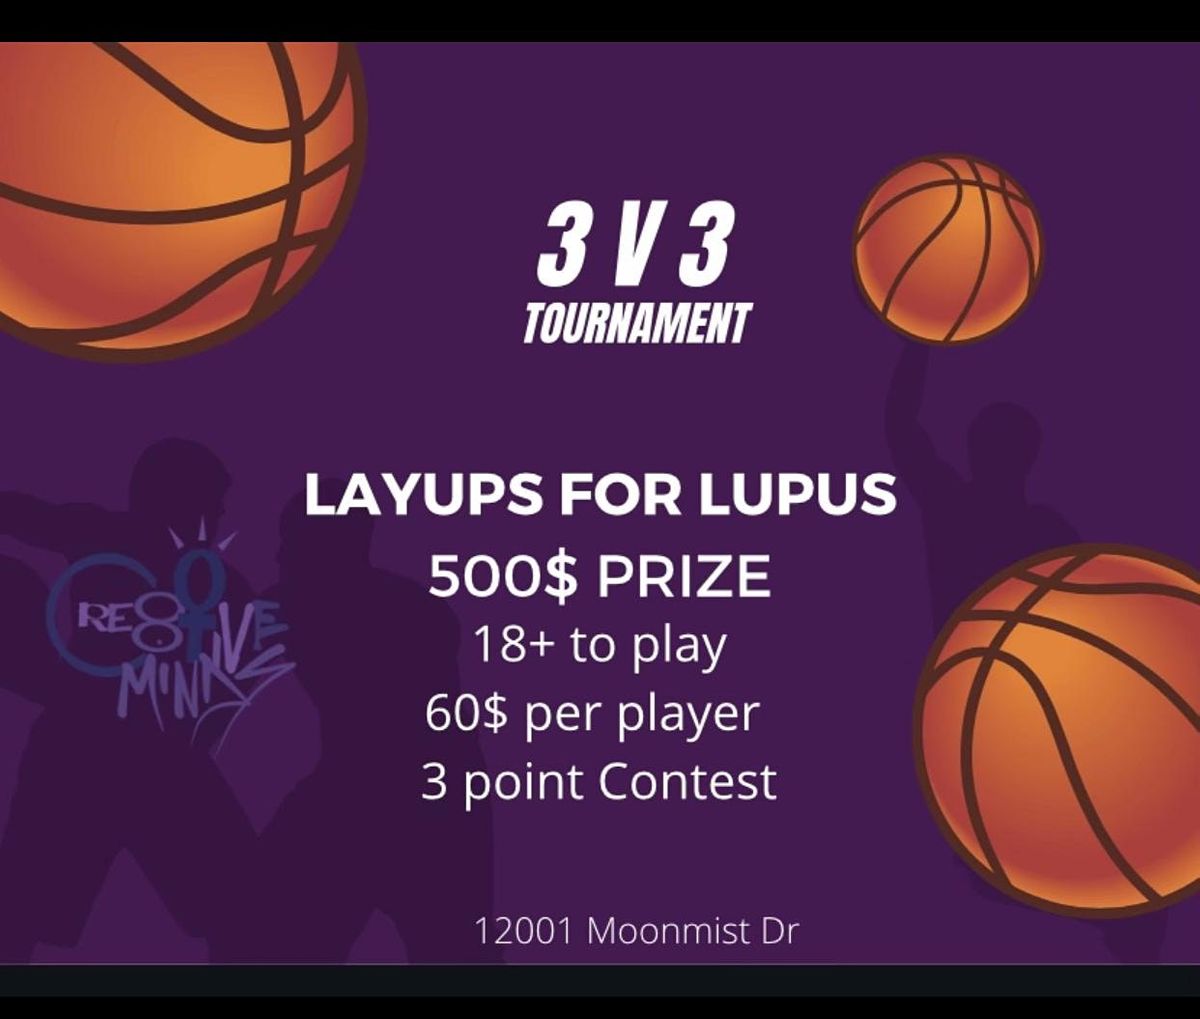 Layups for Lupus